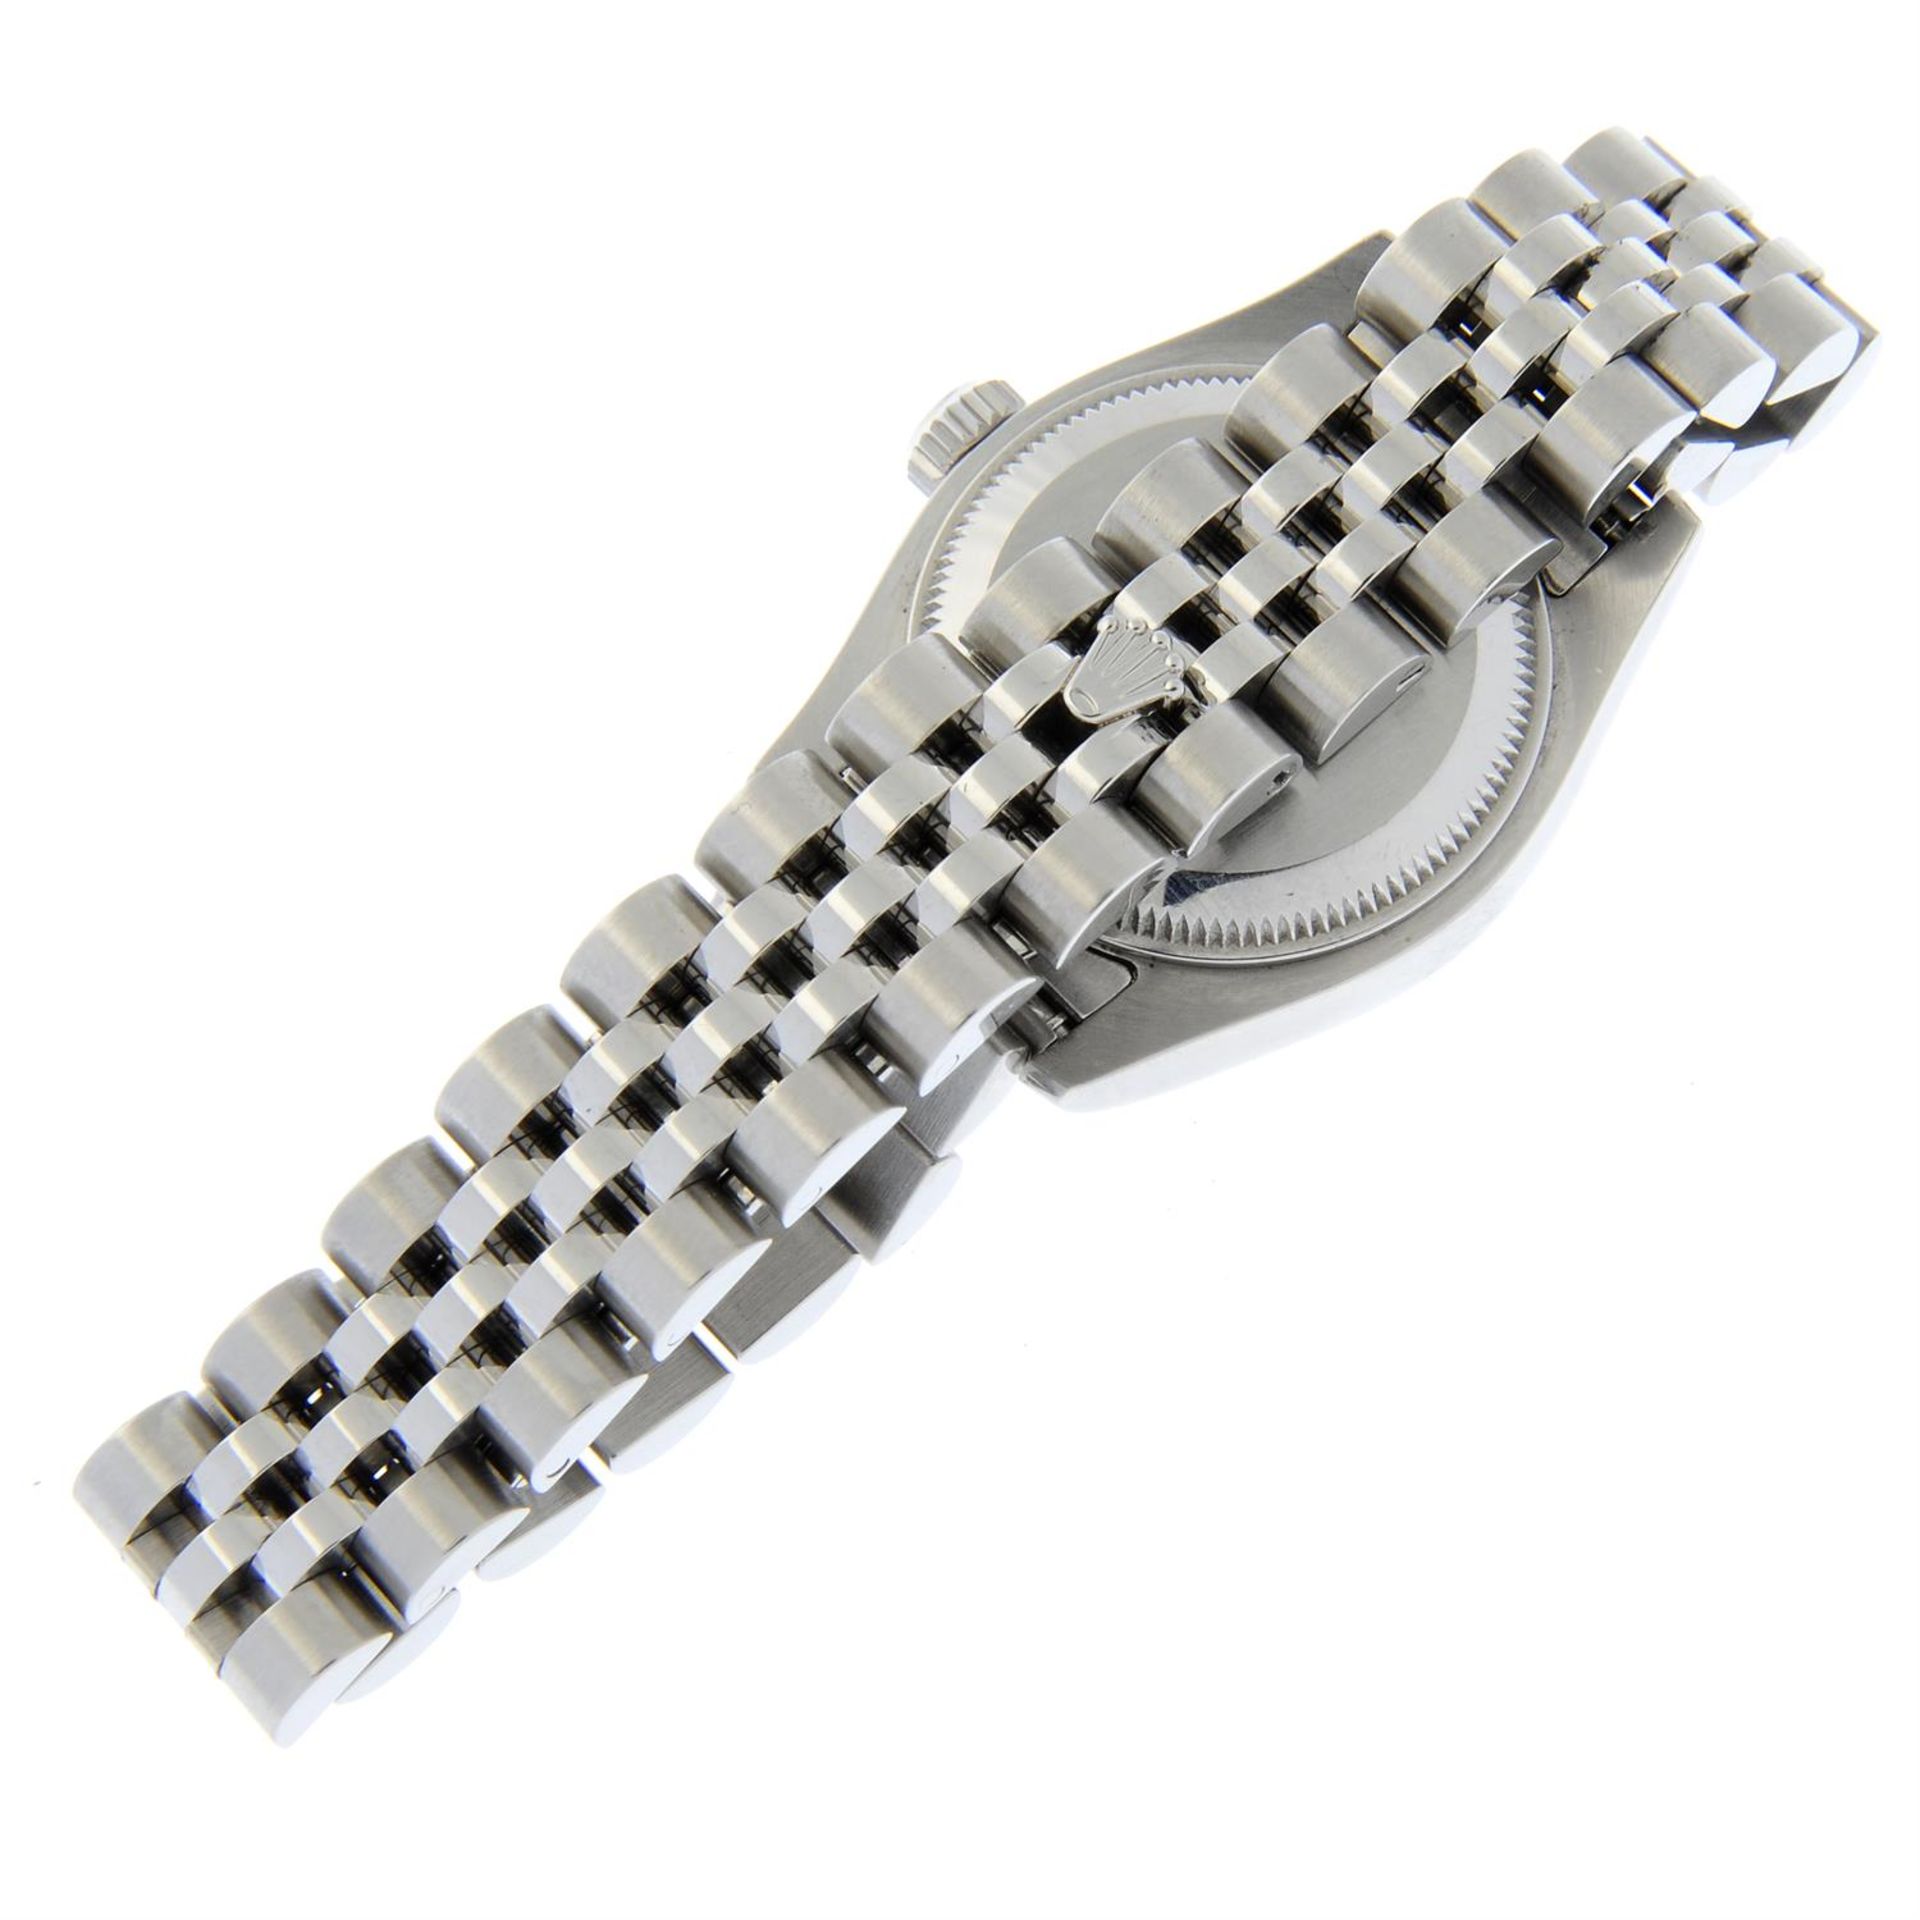 ROLEX - a bi-metal Oyster Perpetual Datejust bracelet watch, 26mm. - Image 2 of 4